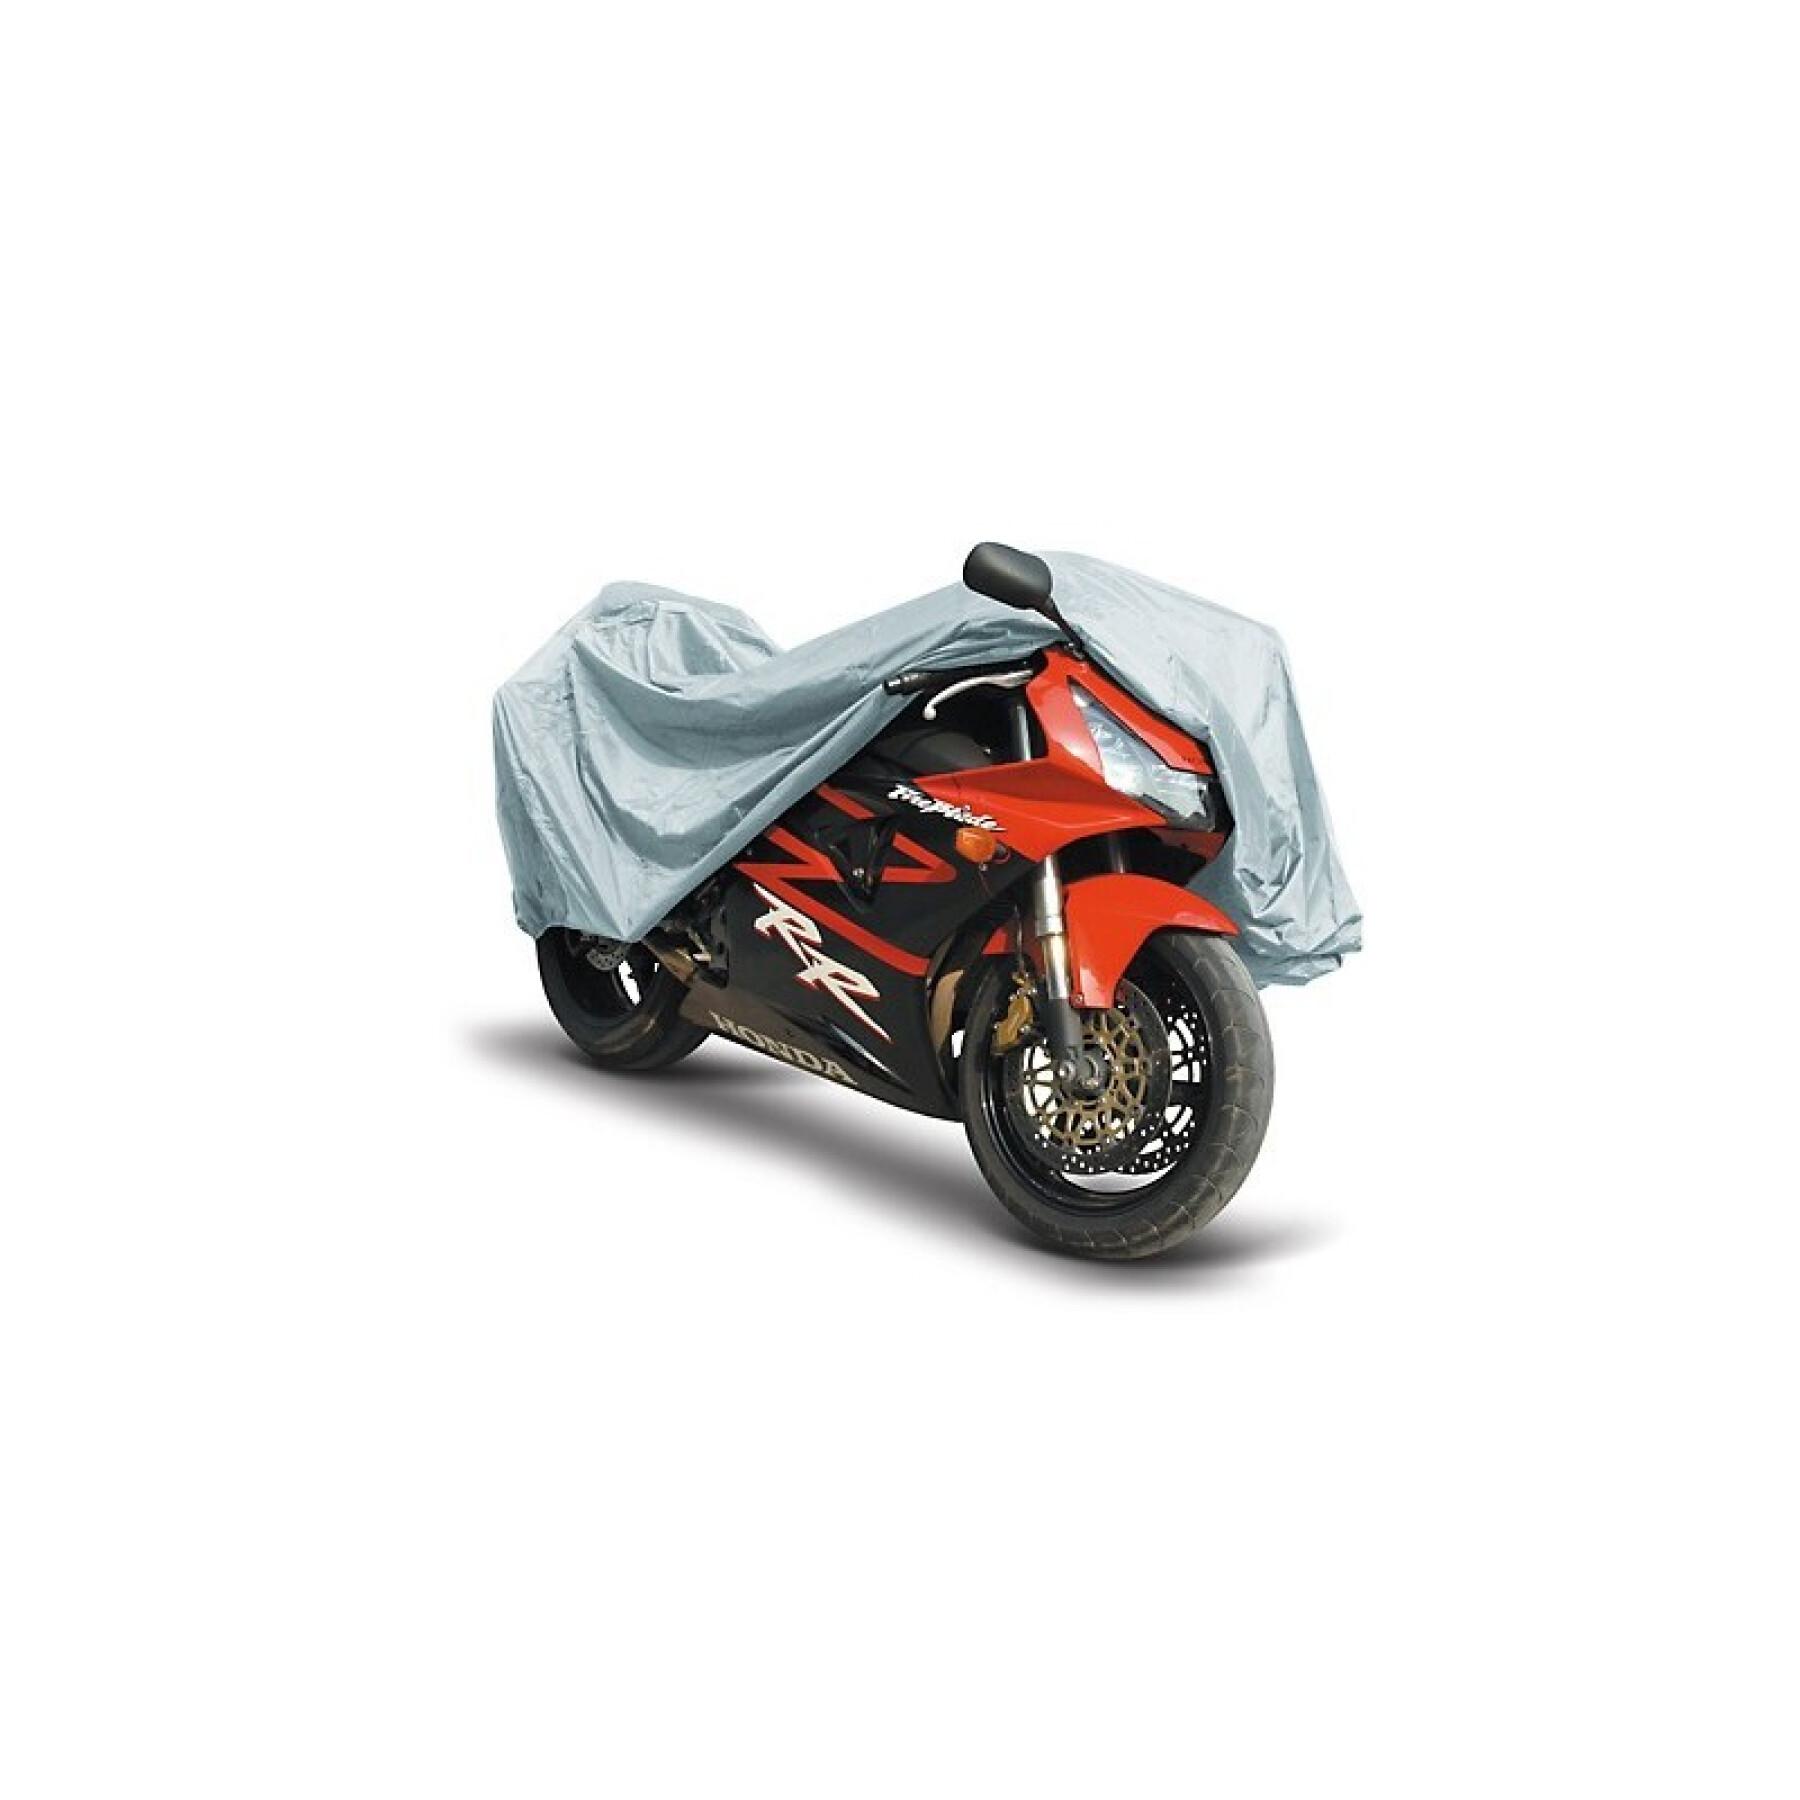 Housse moto Brazoline Top Cover - Housses - Accessoires - Moto & scooter